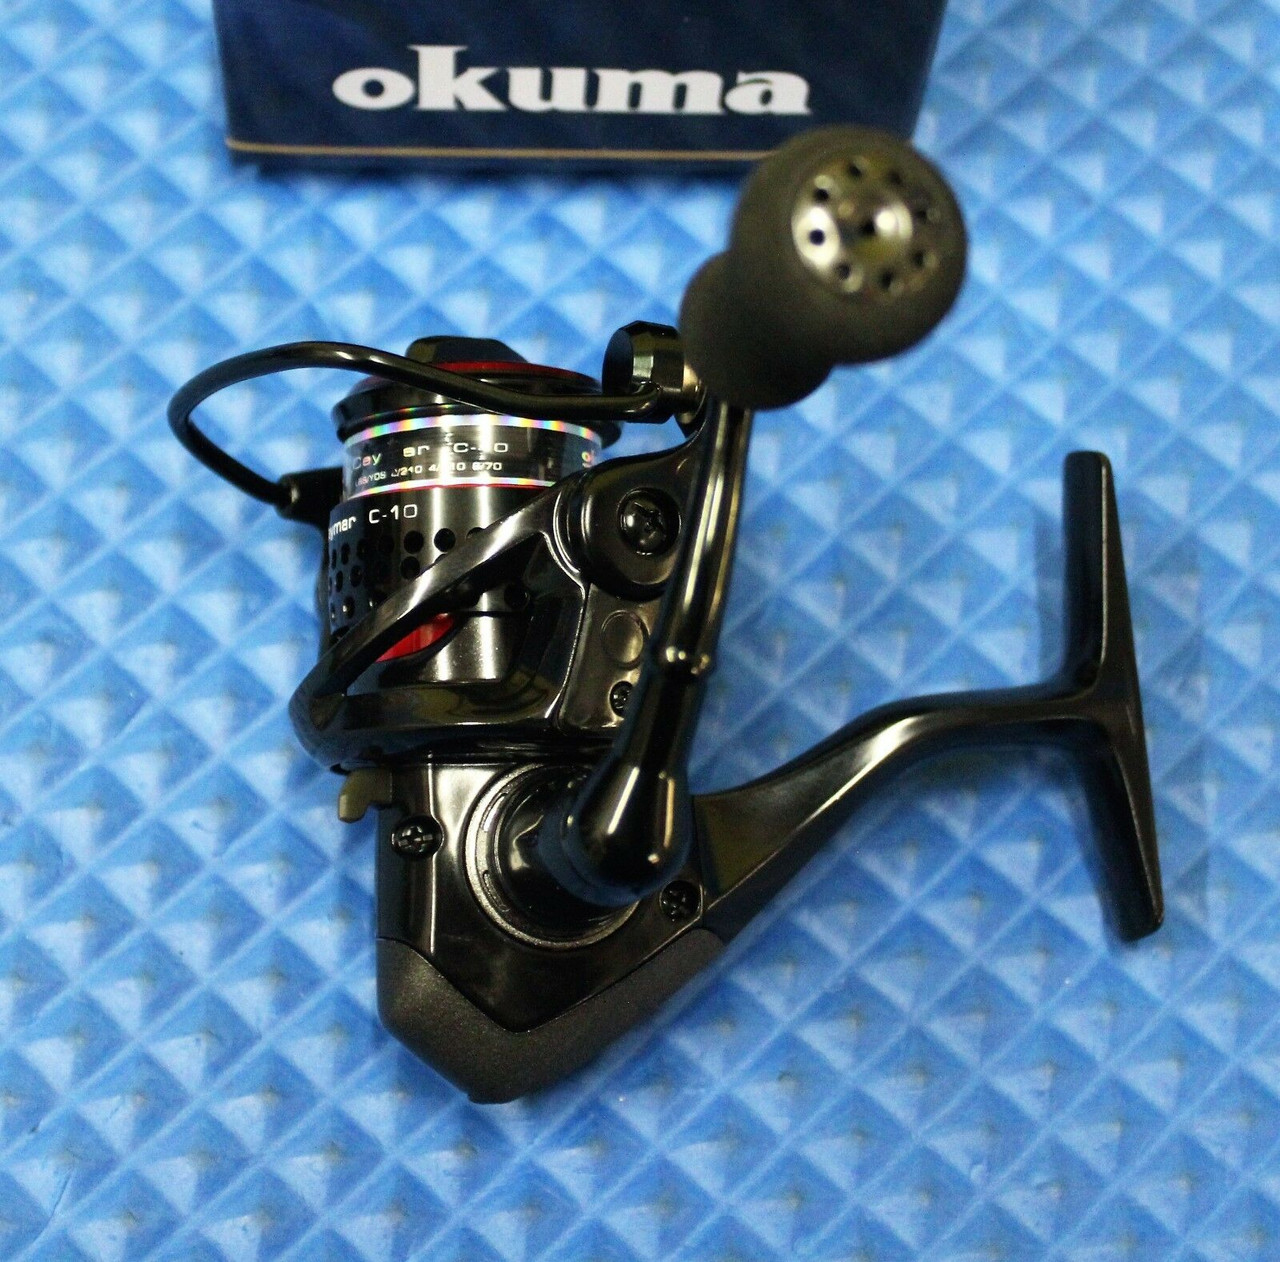 okuma Ceymar Lightweight Spinning Reel- C-30, Black/Red Sporting Goods  Outdoor Recreation Fishing Fishing Reels